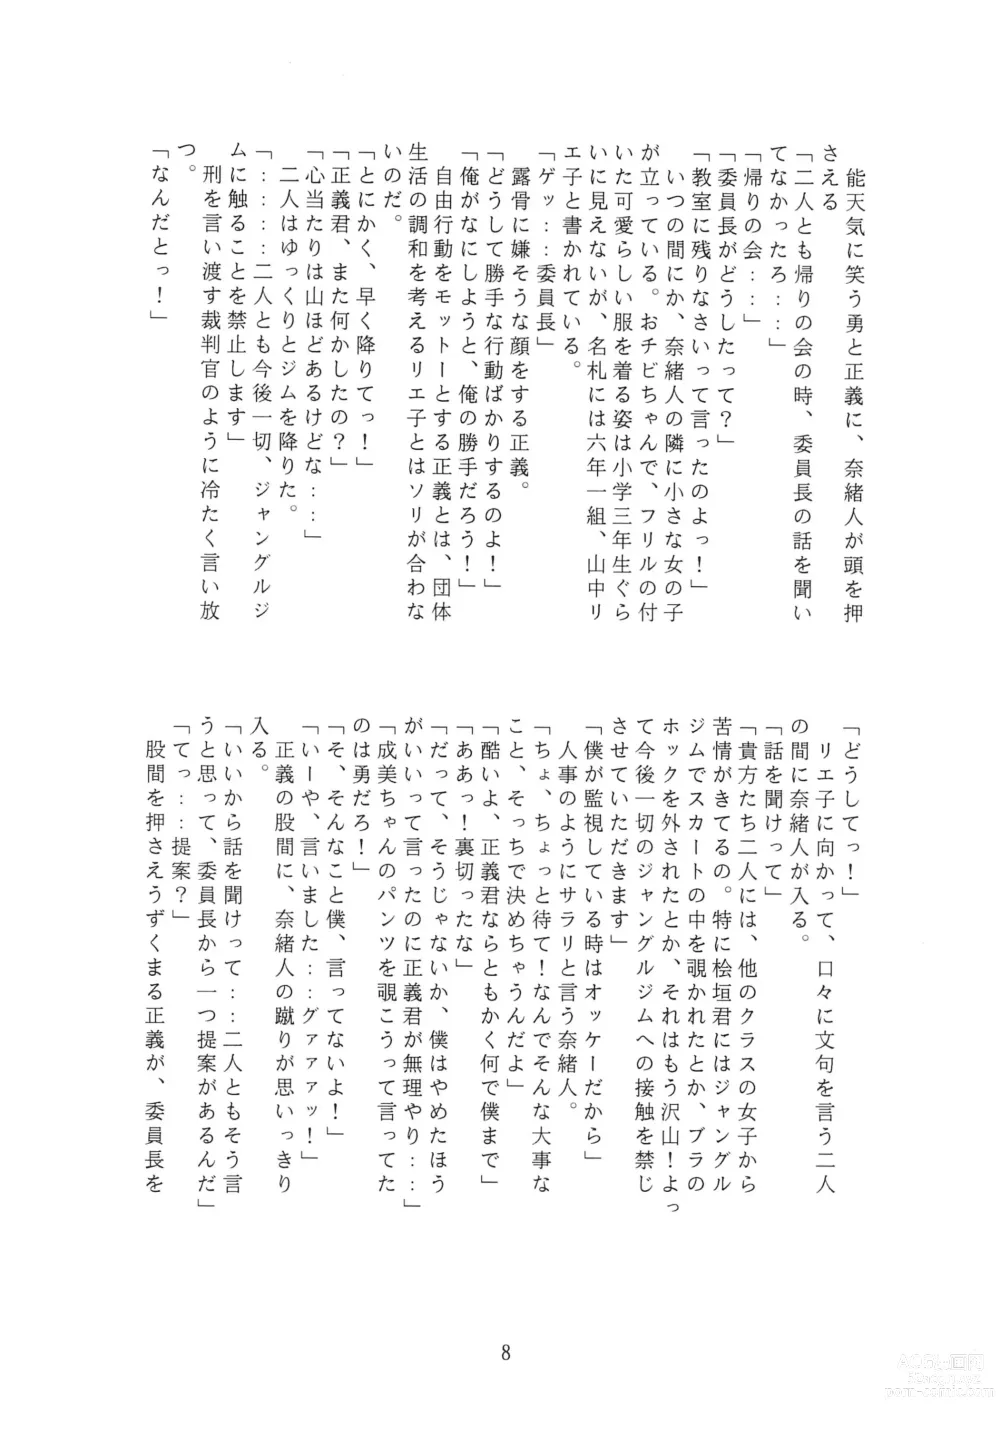 Page 8 of doujinshi JANGLE ONI Mermaid